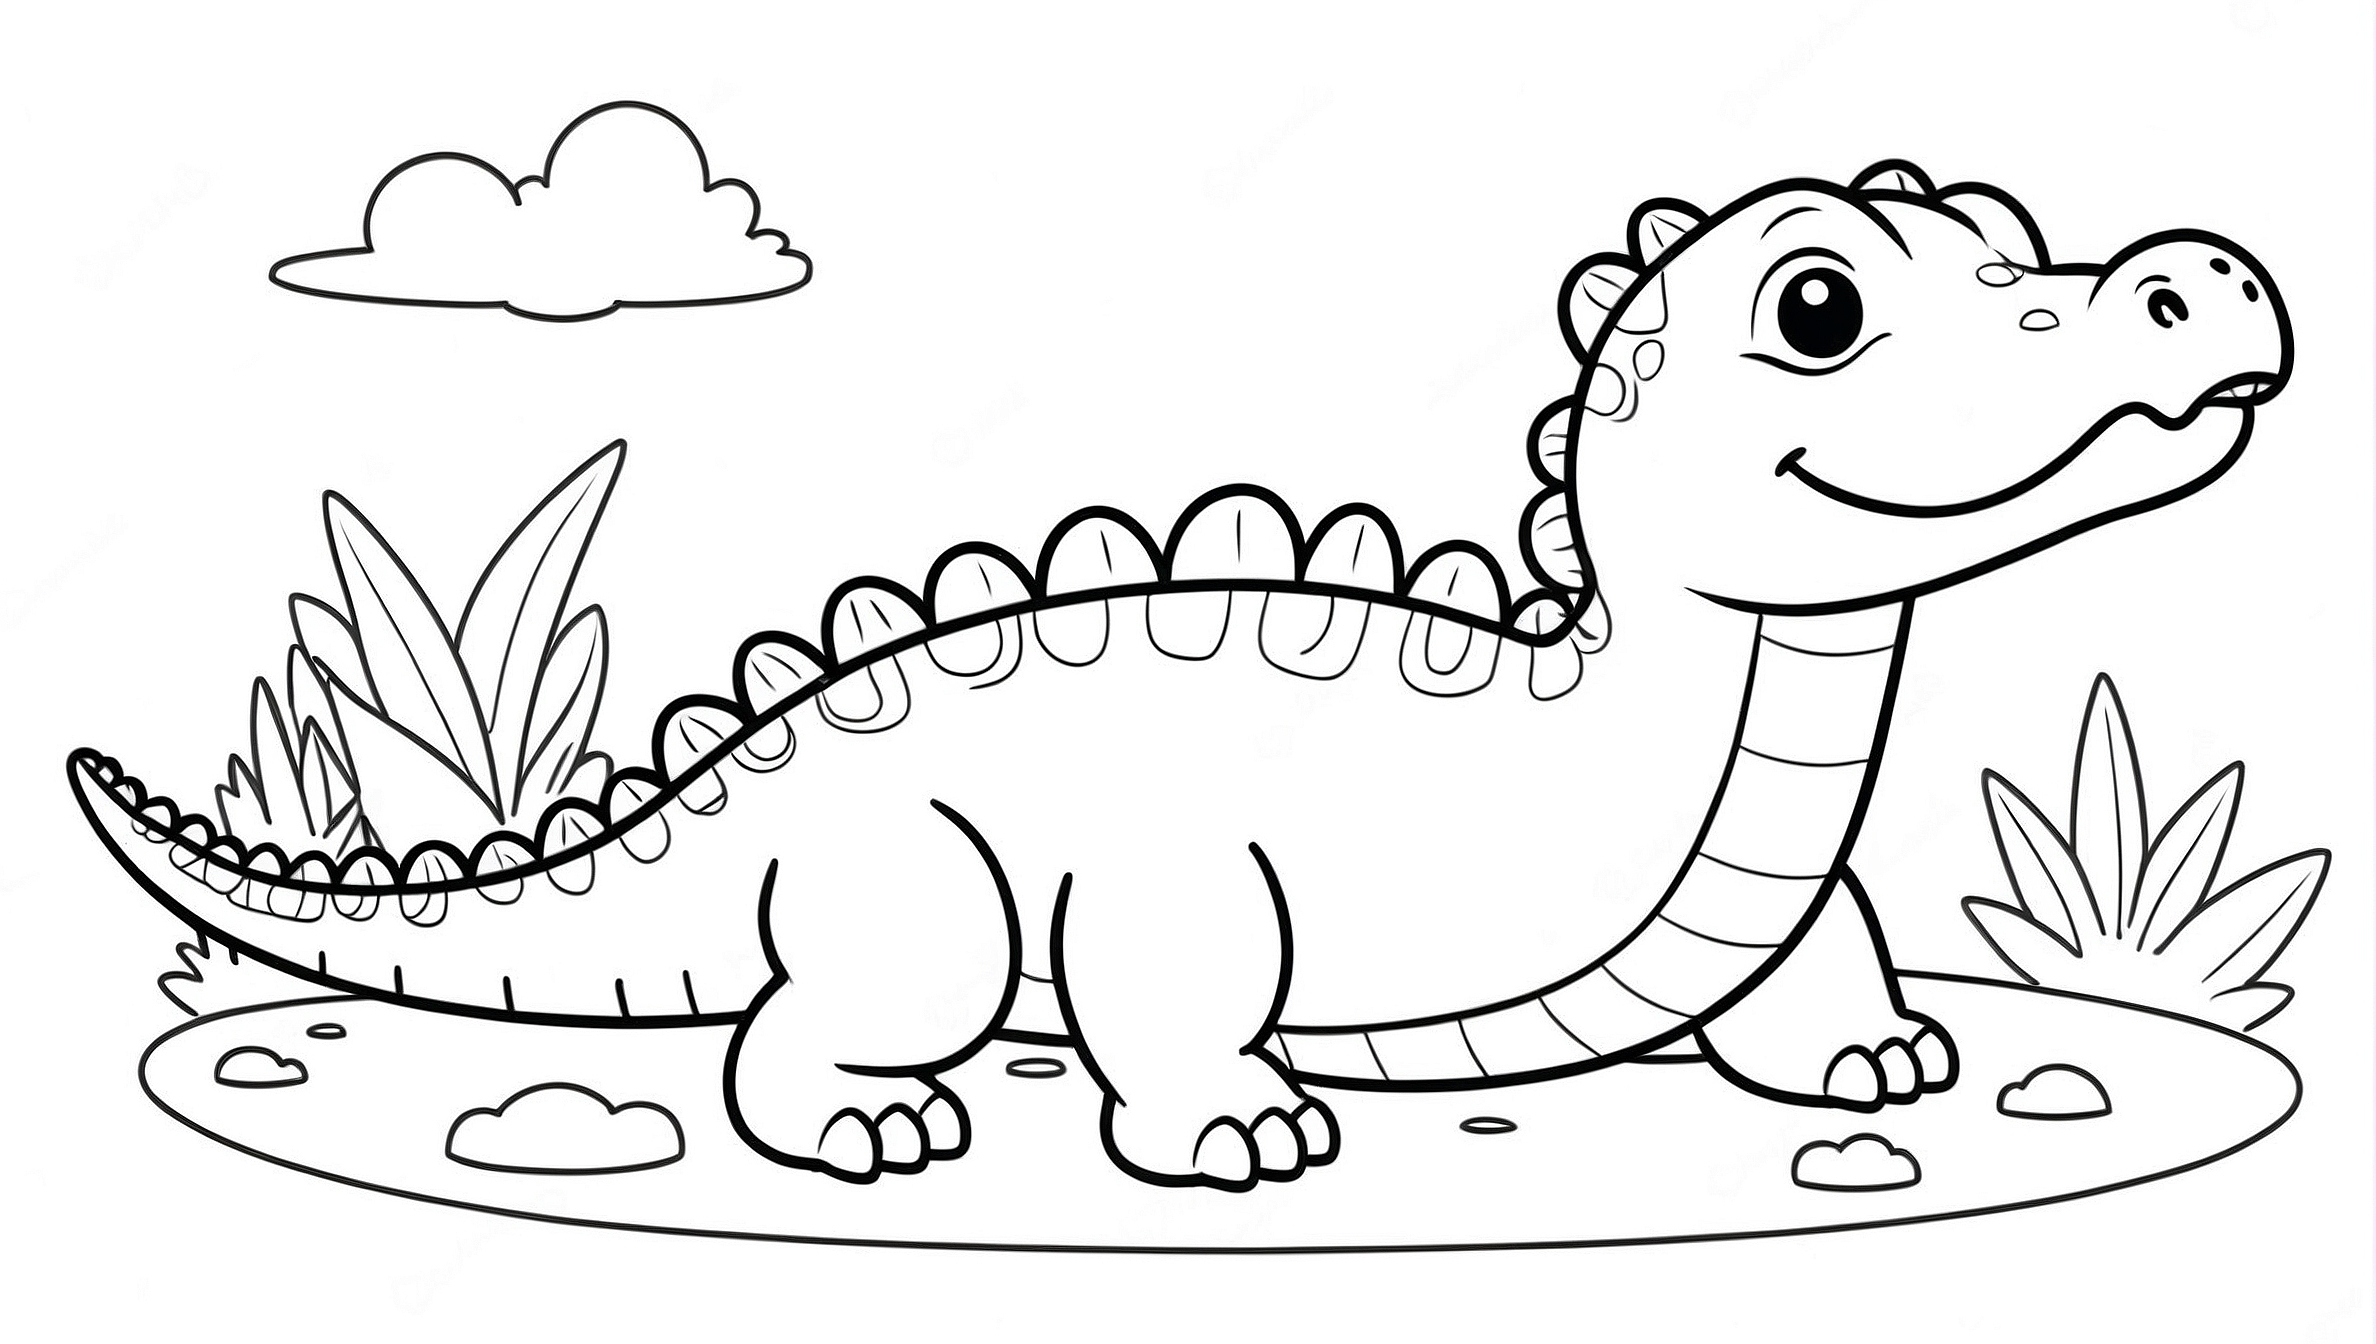 Crocodile Coloring Page